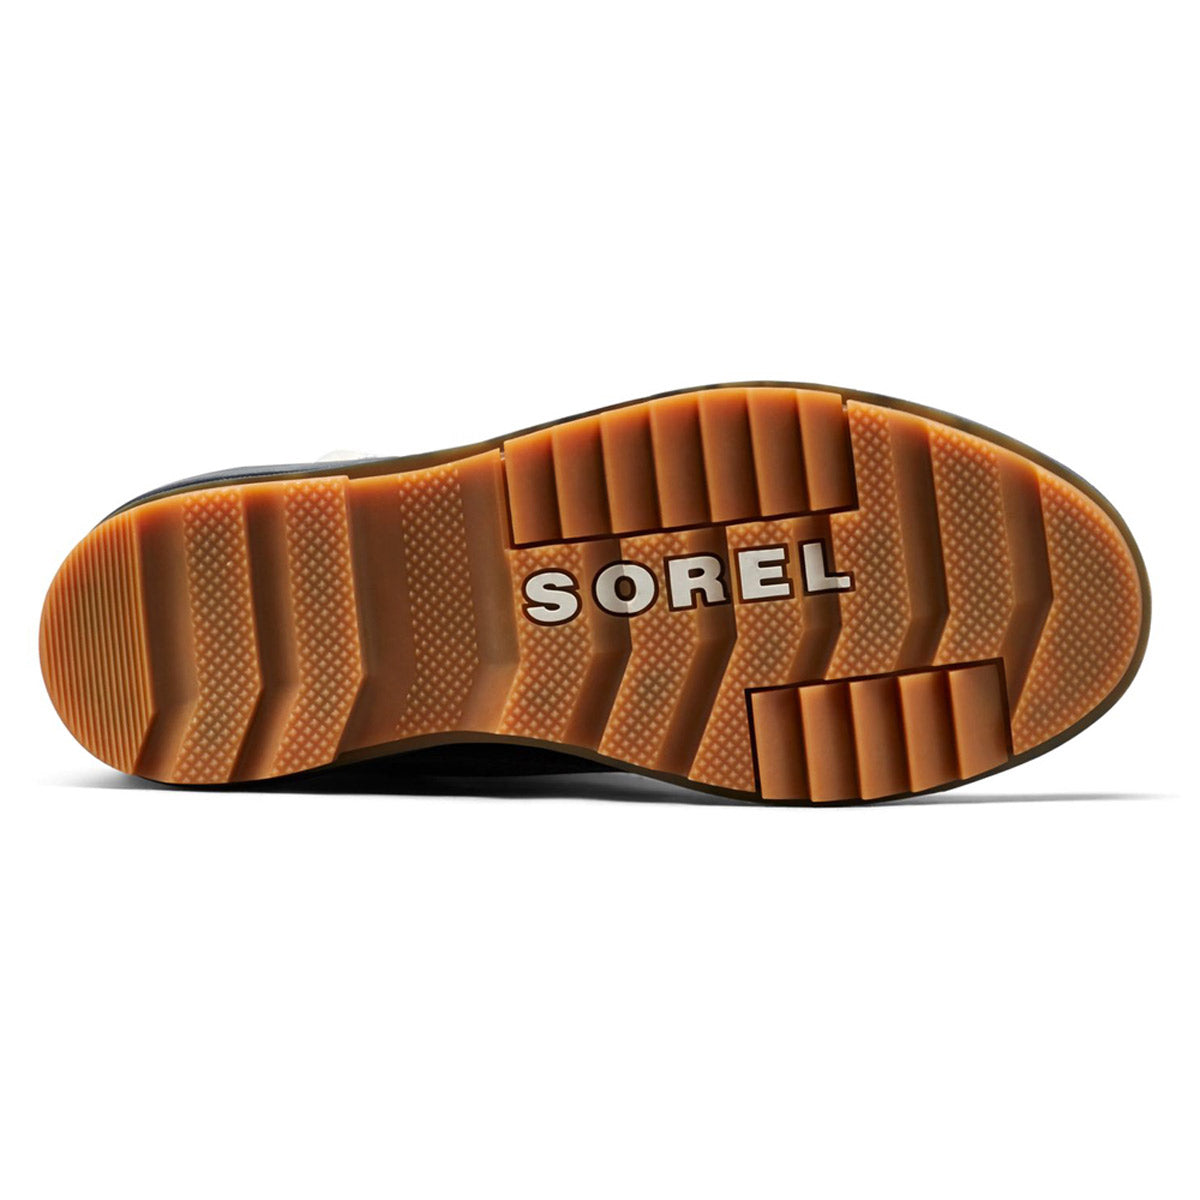 Tread of a SOREL TIVOLI IV QUARRY - WOMENS shoe showcasing its deep lug pattern for traction.